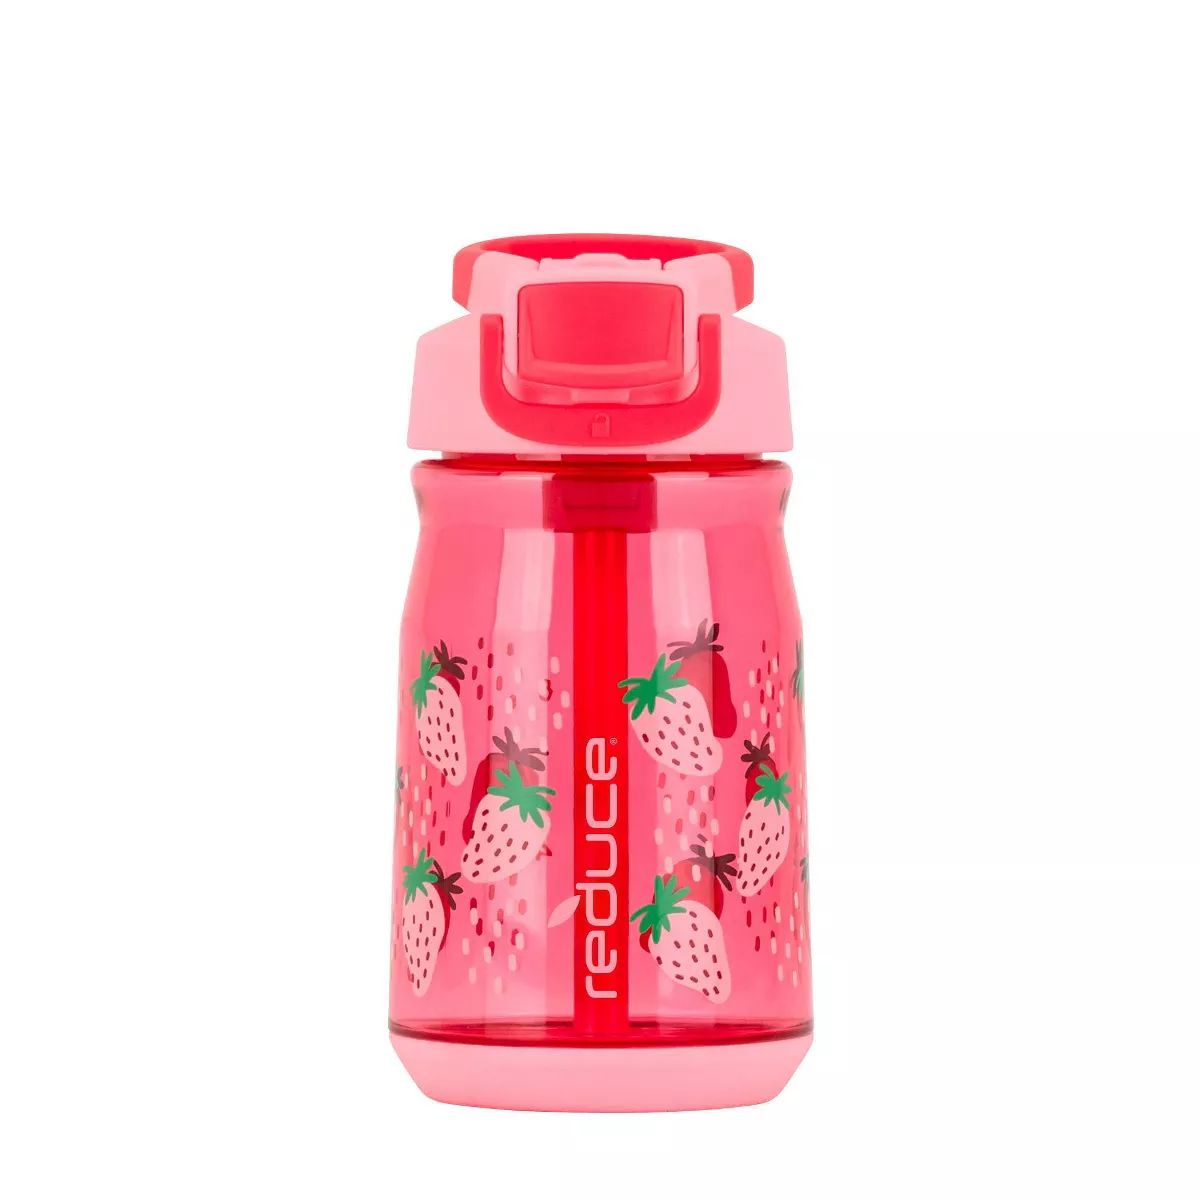 Reduce 14oz Plastic Hydrate Tritan Kids Water Bottle with Straw Lid Berry Sweet | Target